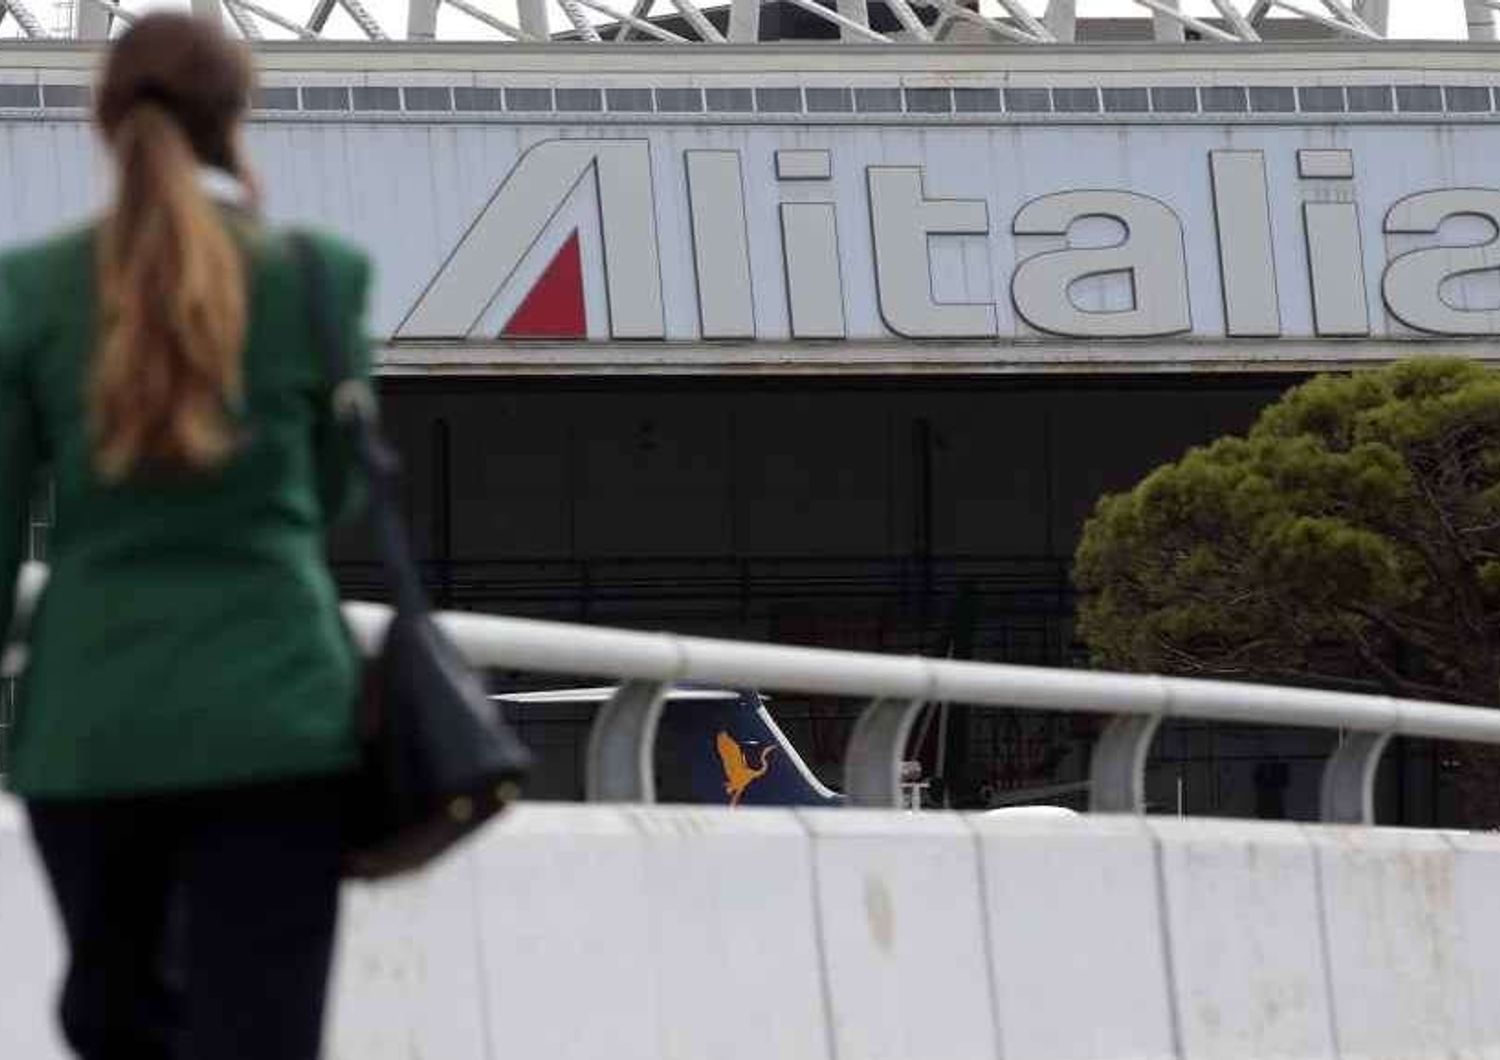 Alitalia-government-unions resume negotiations after break